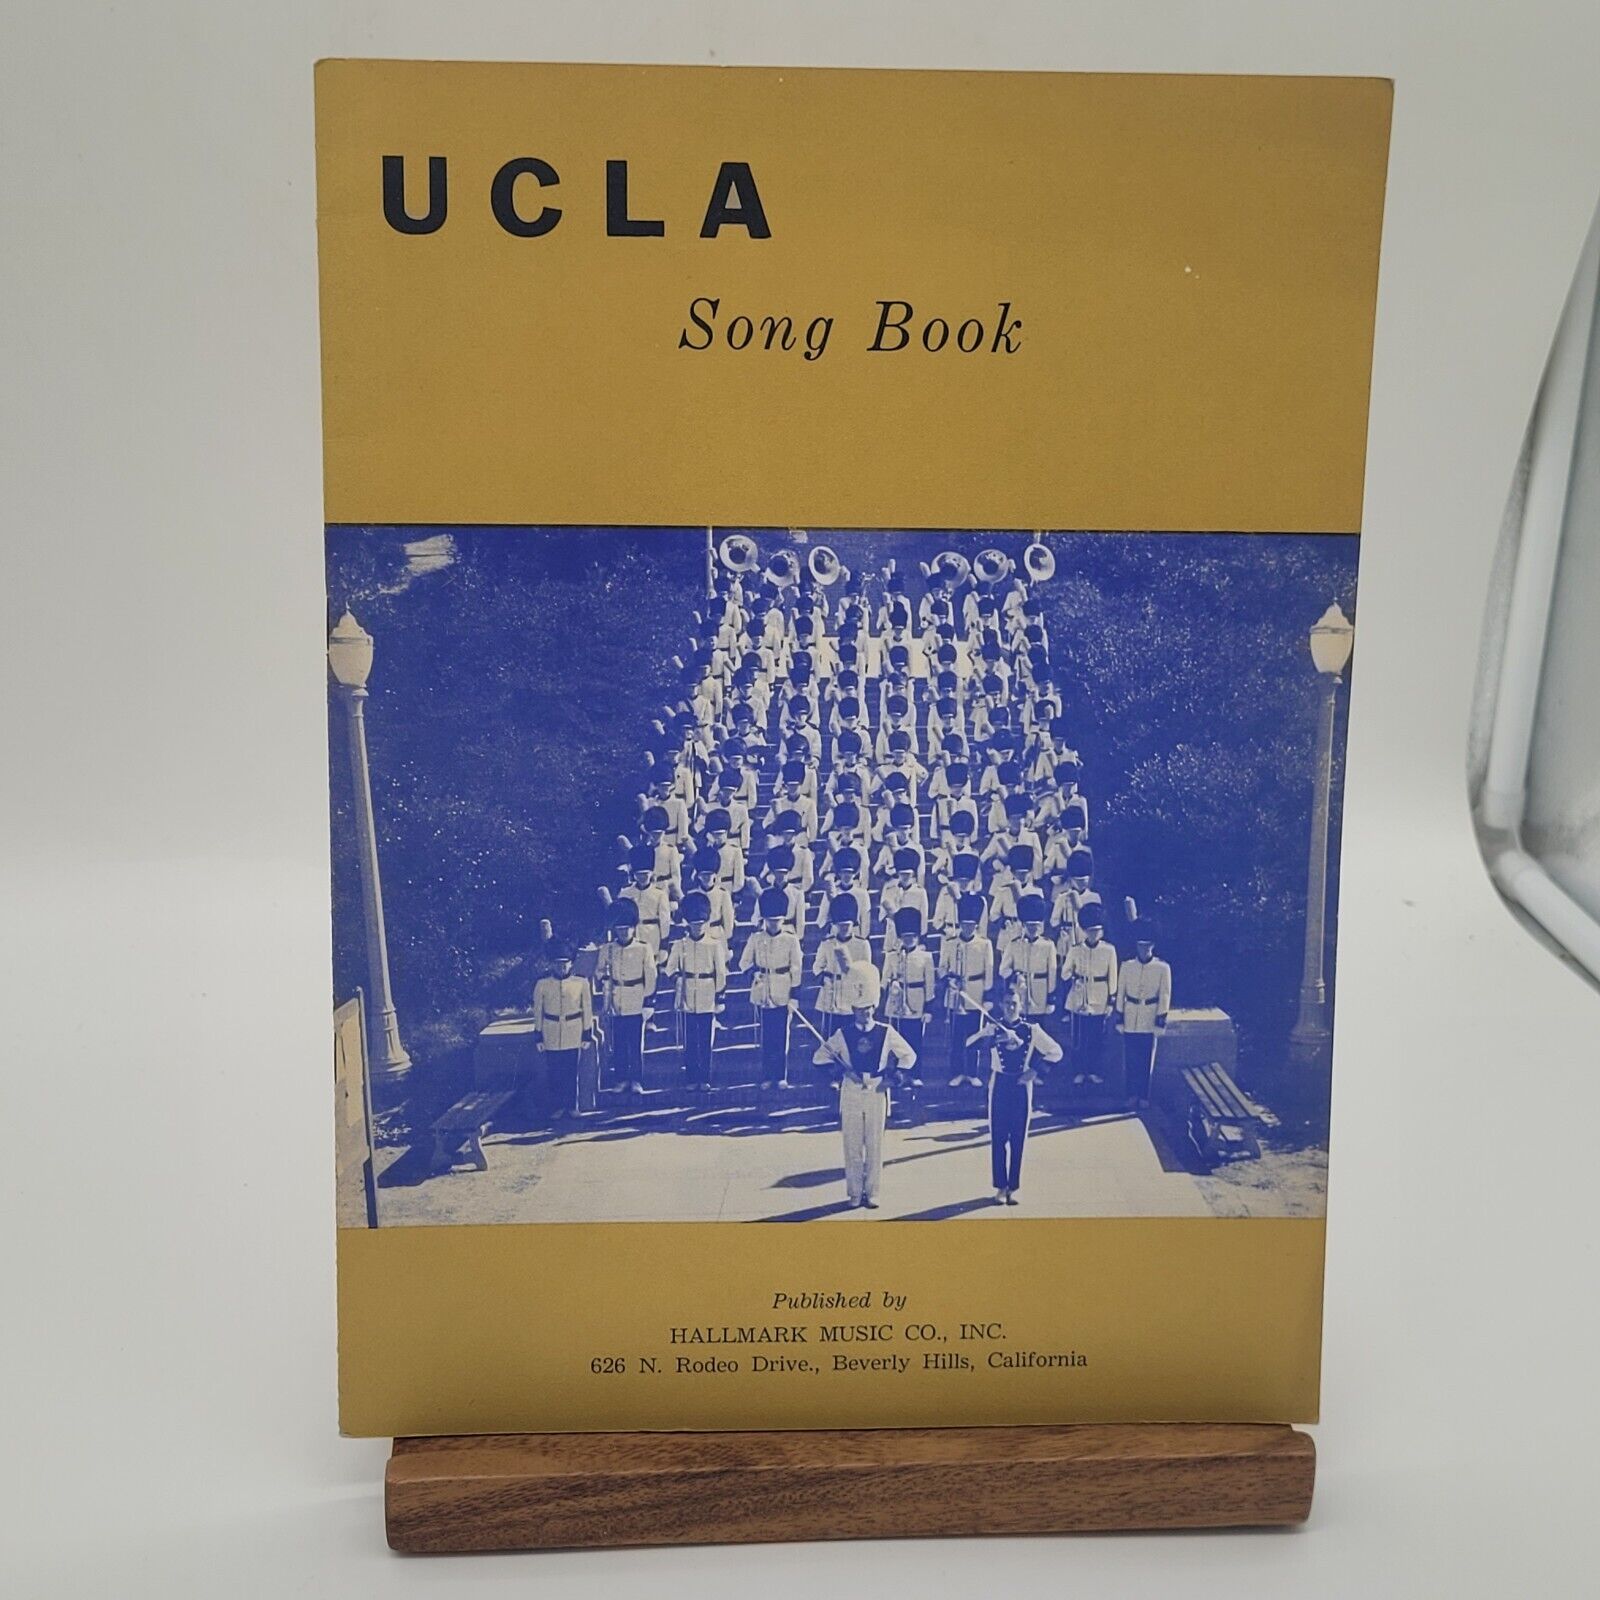 1963 UNIVERSITY Of CALIFORNIA UCLA SONG BOOK SHEET MUSIC HALLMARK PUBLISHING CO